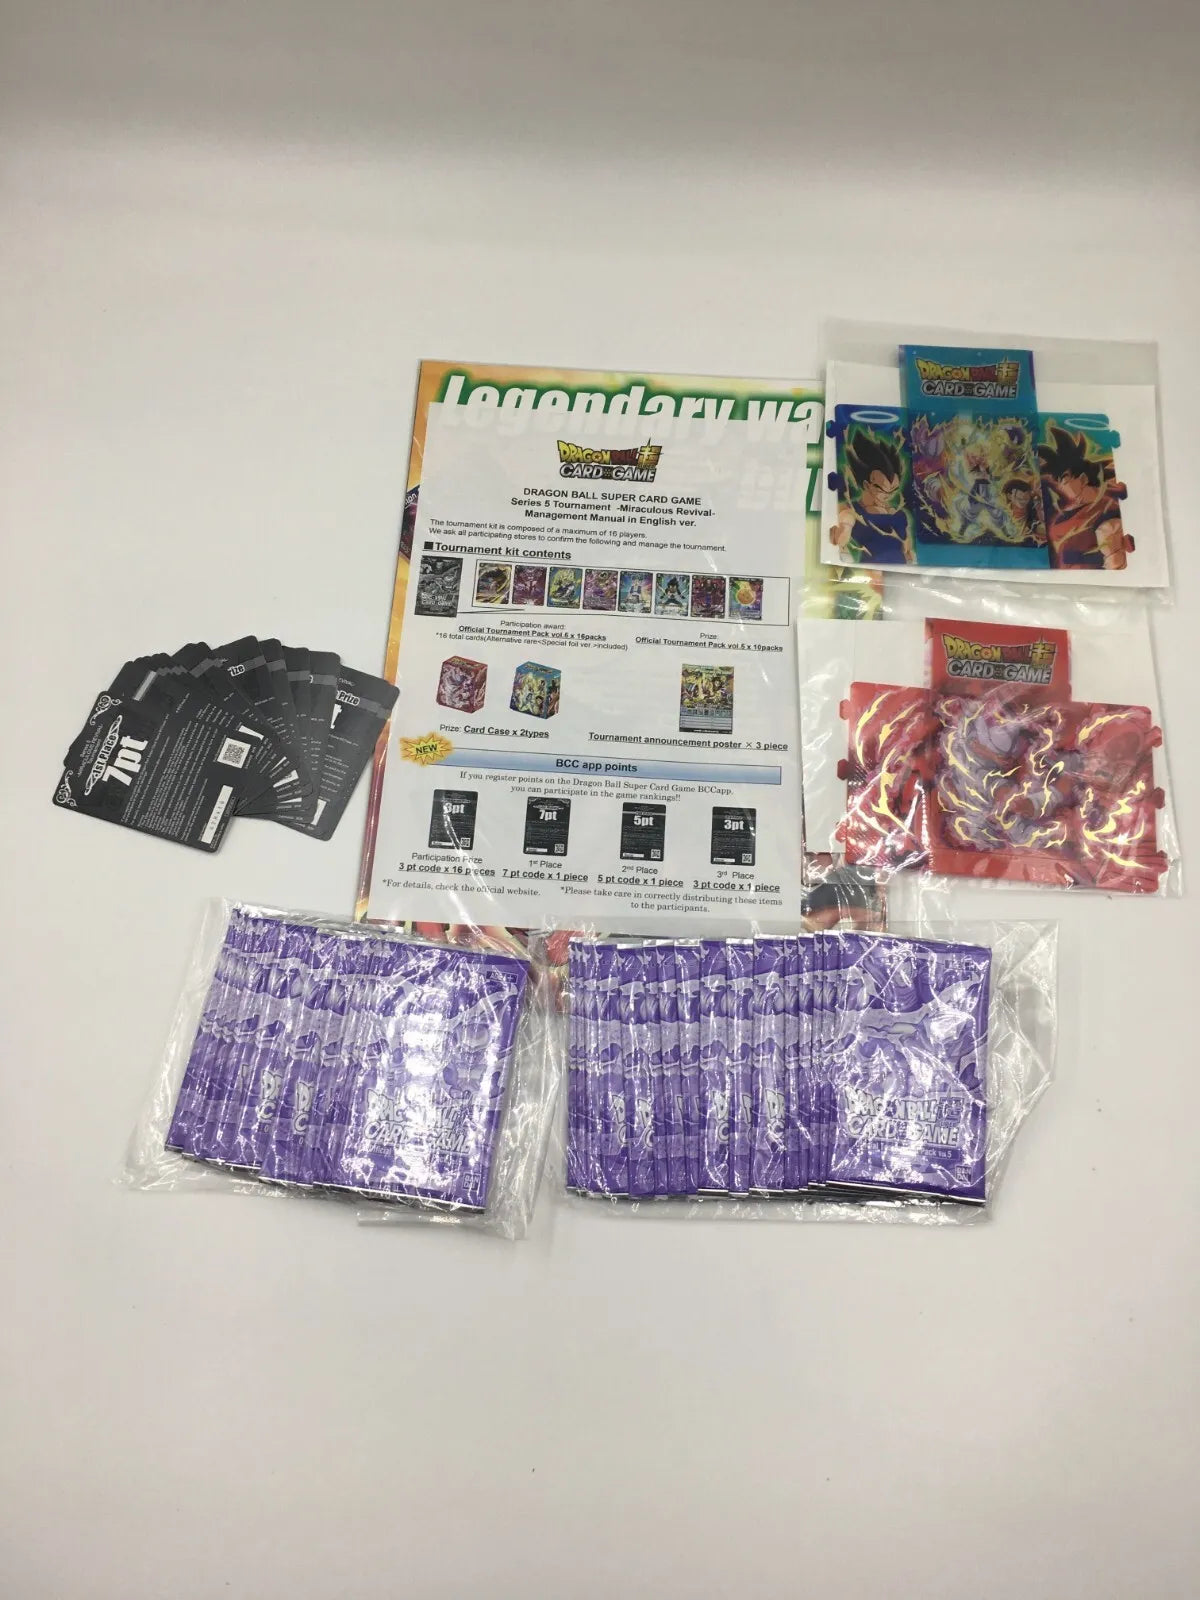 2018 Dragon Ball Super Trading Card Gane CCG - Tournament Kit 5 - SEALED